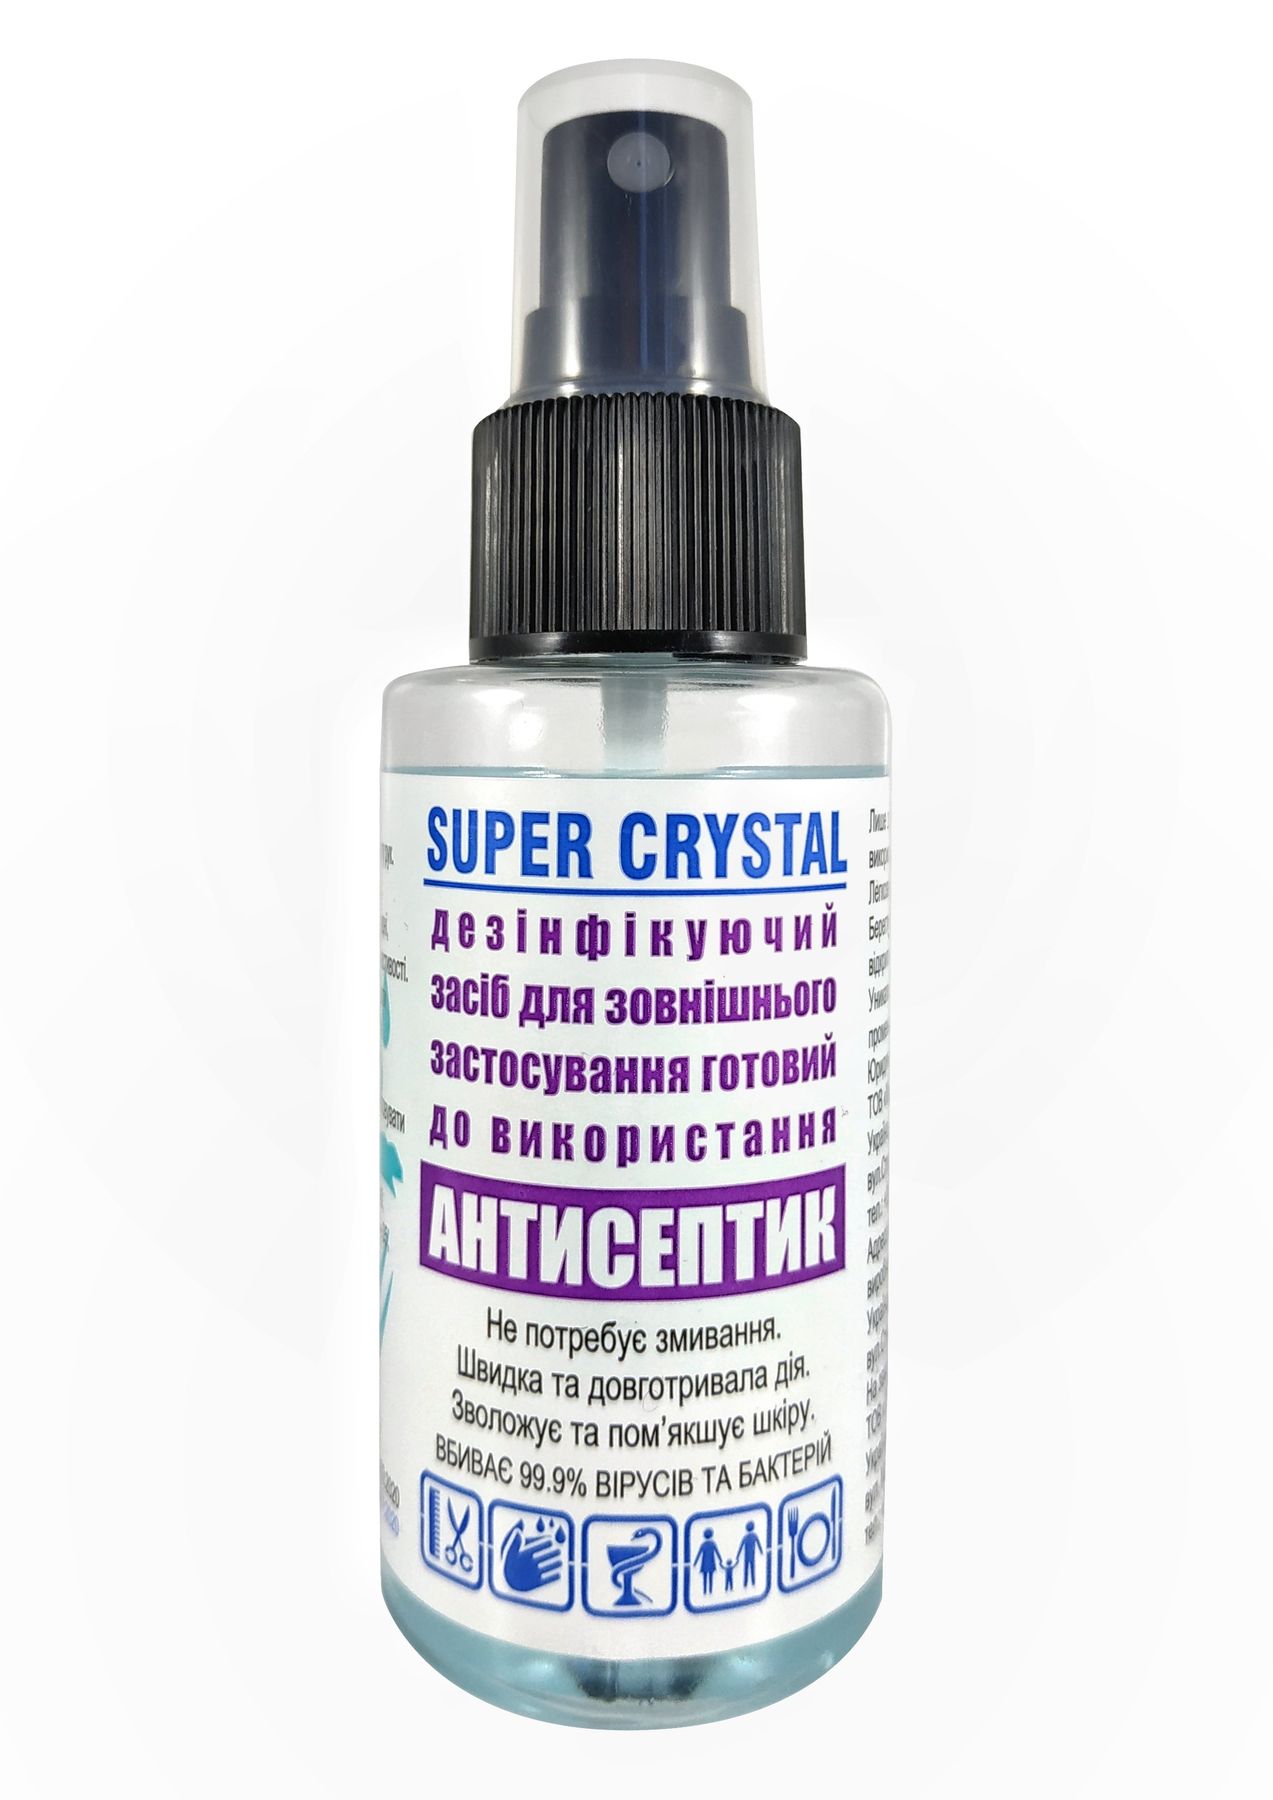 Super crystal. Кристалин антисептик. RF-Supercrystal инструкция.